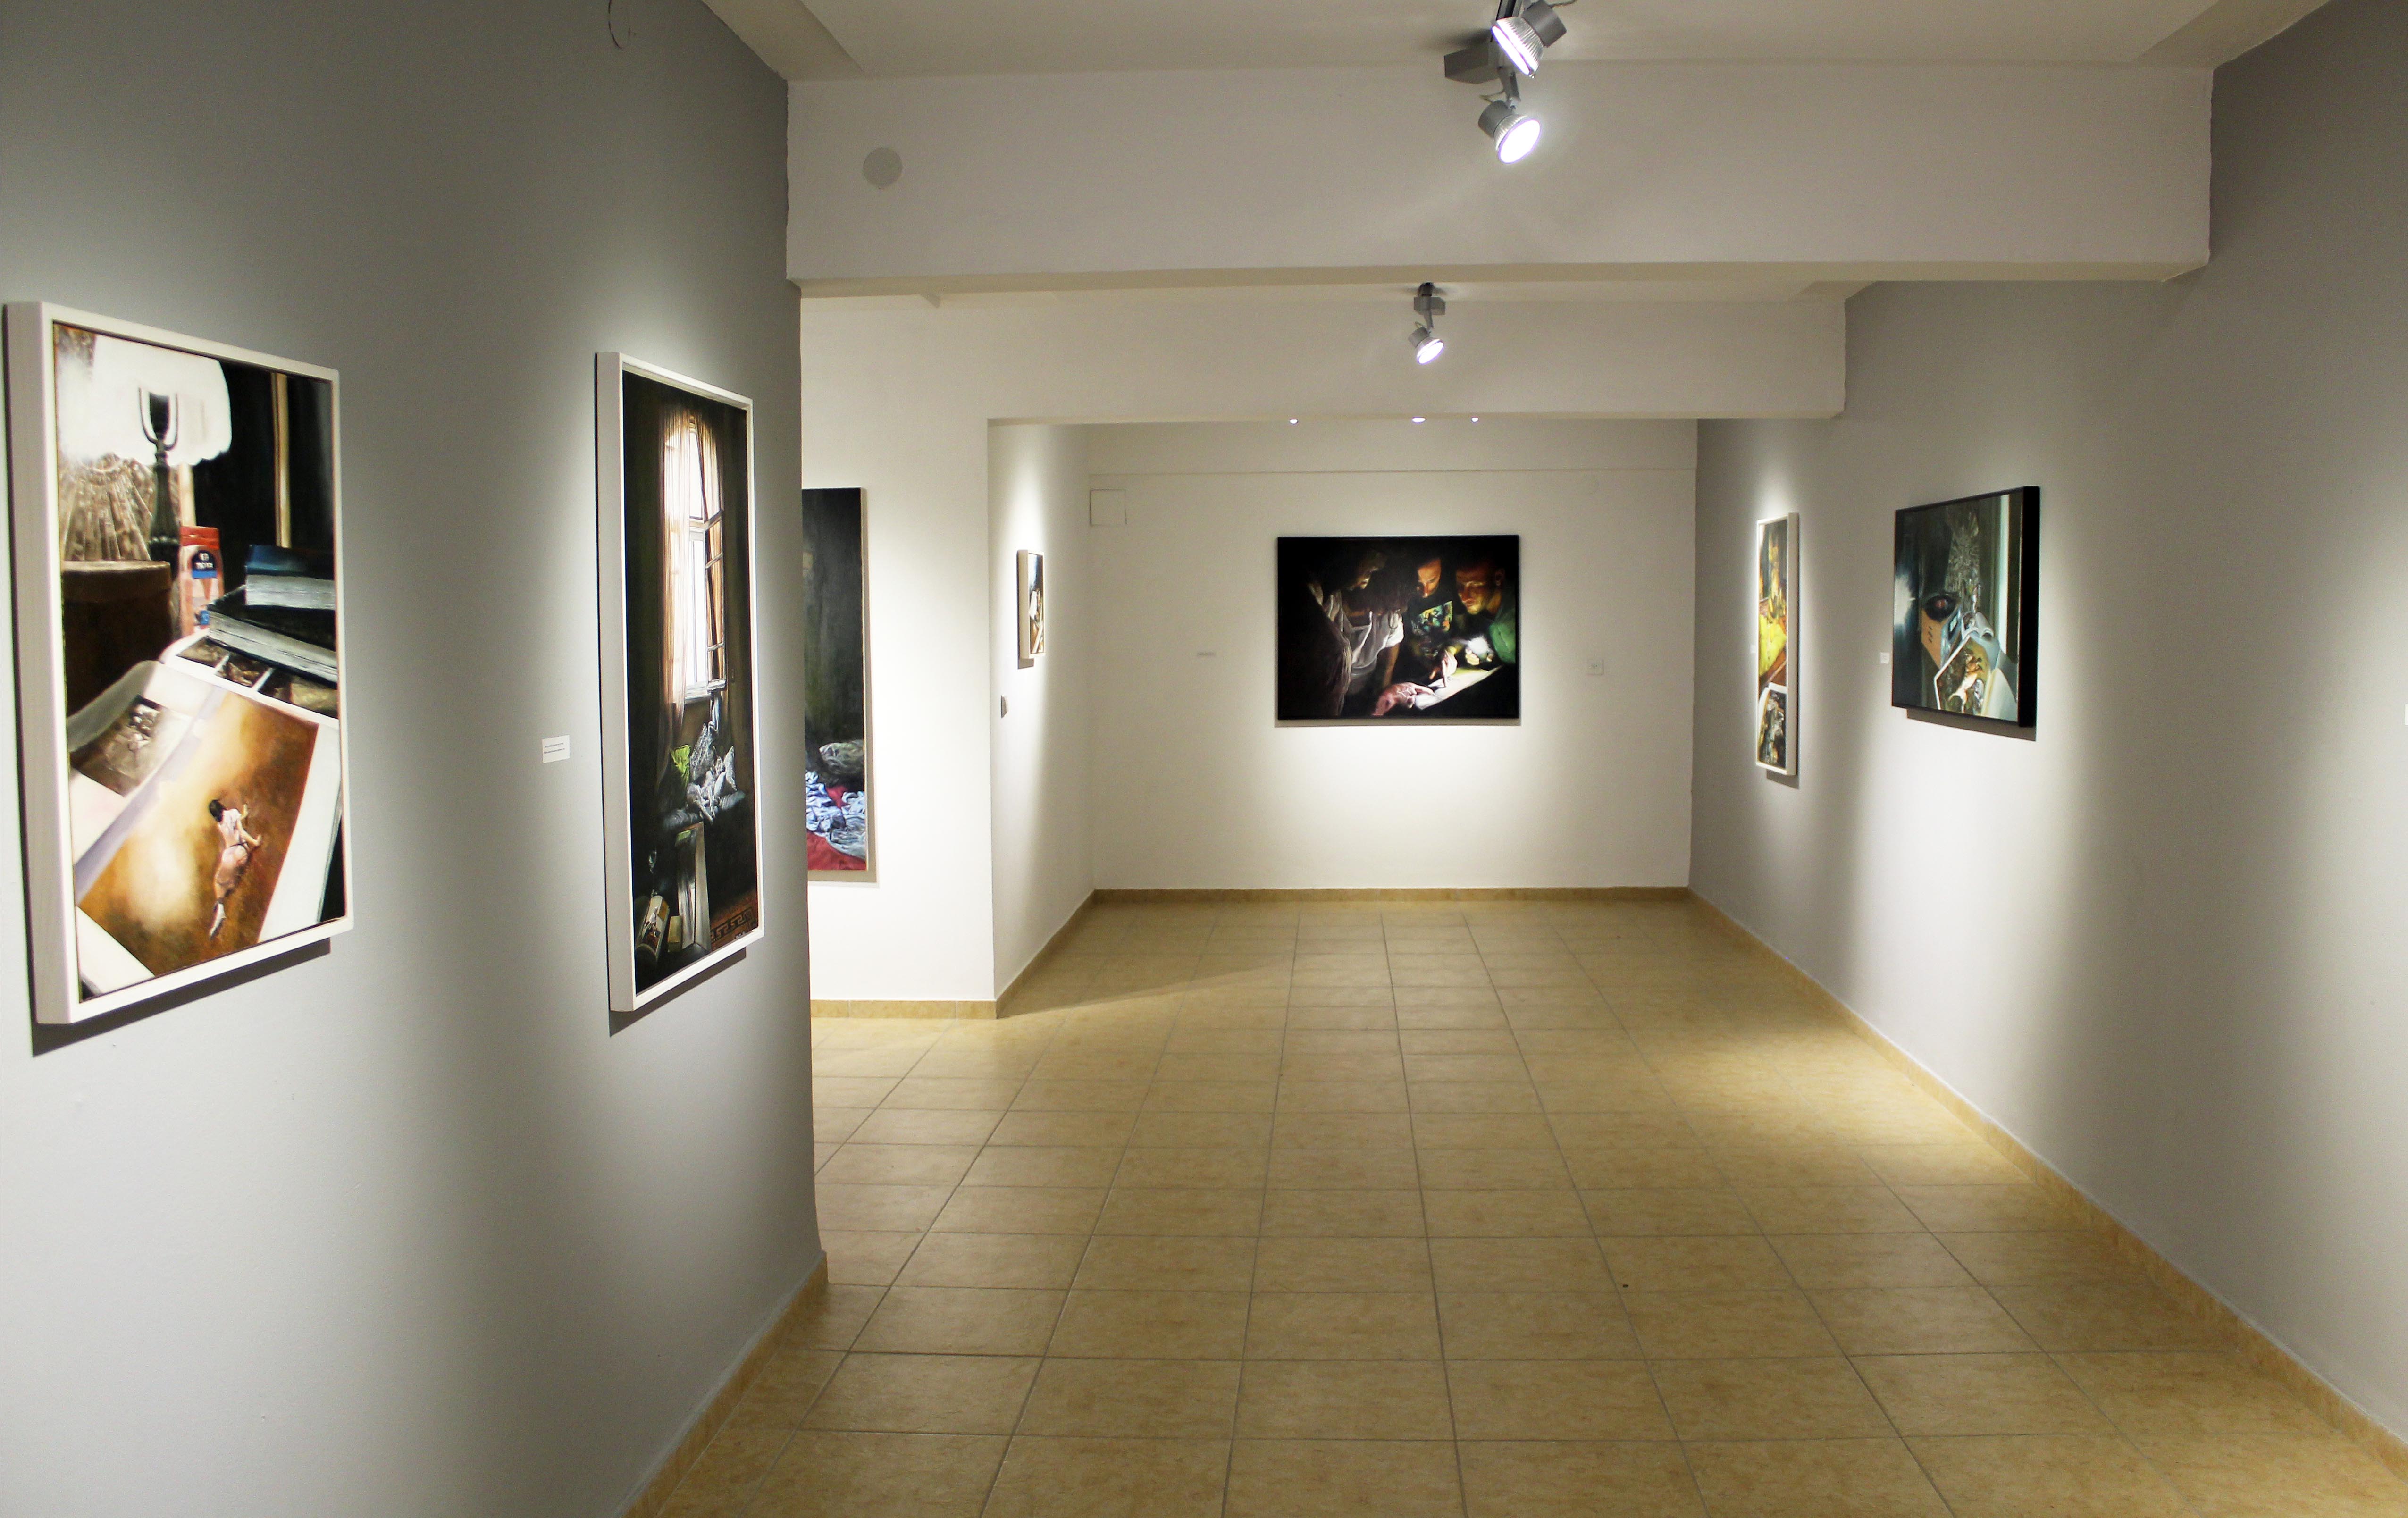 ”Dazzling” solo exhibition, The Gallery of Art at Kibbutz Ramot Menashe, 2019-2020